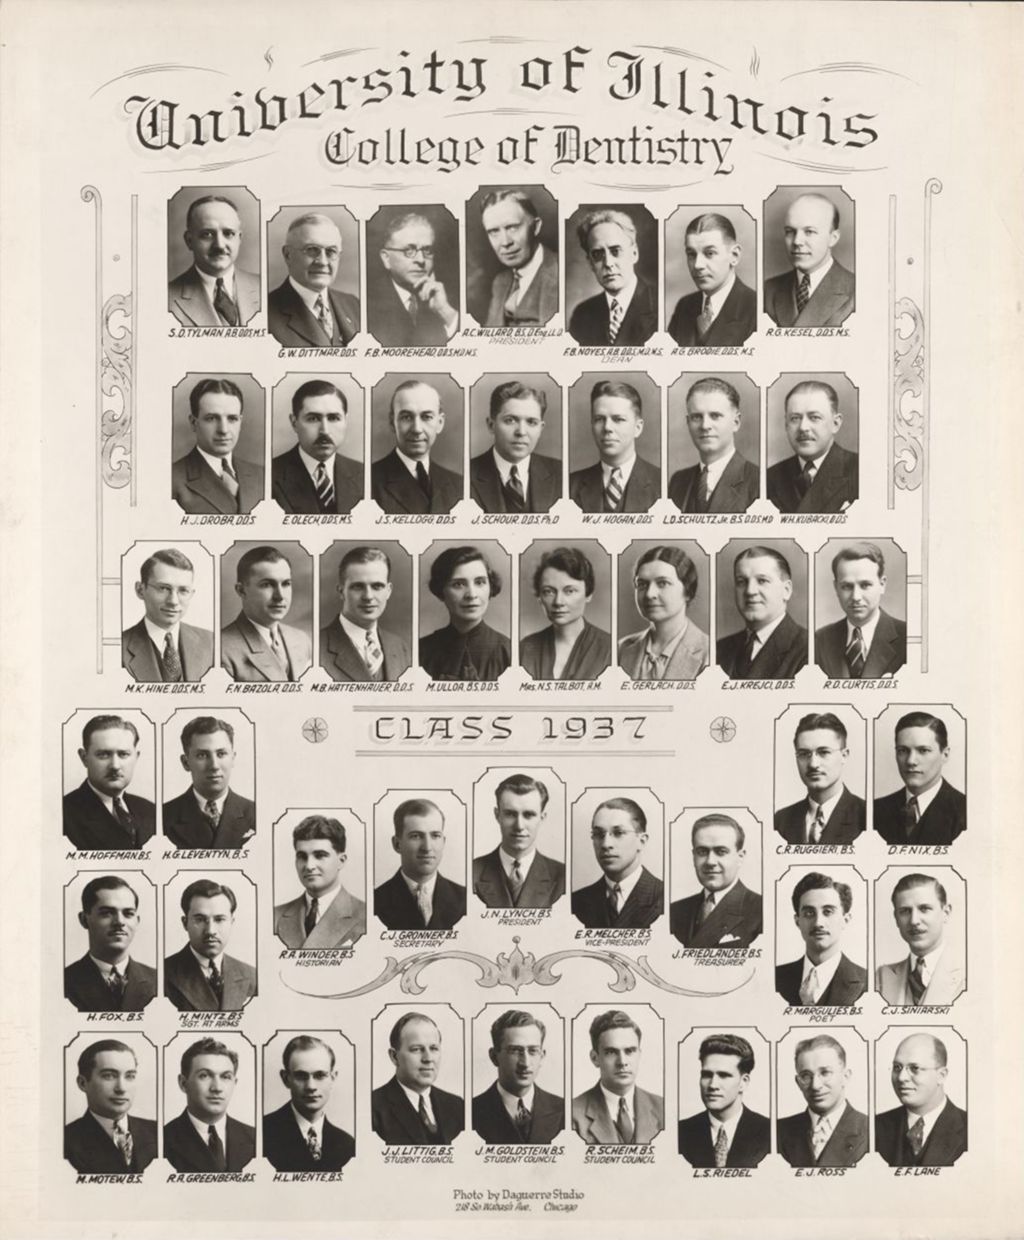 Miniature of 1937 graduating class, University of Illinois College of Dentistry